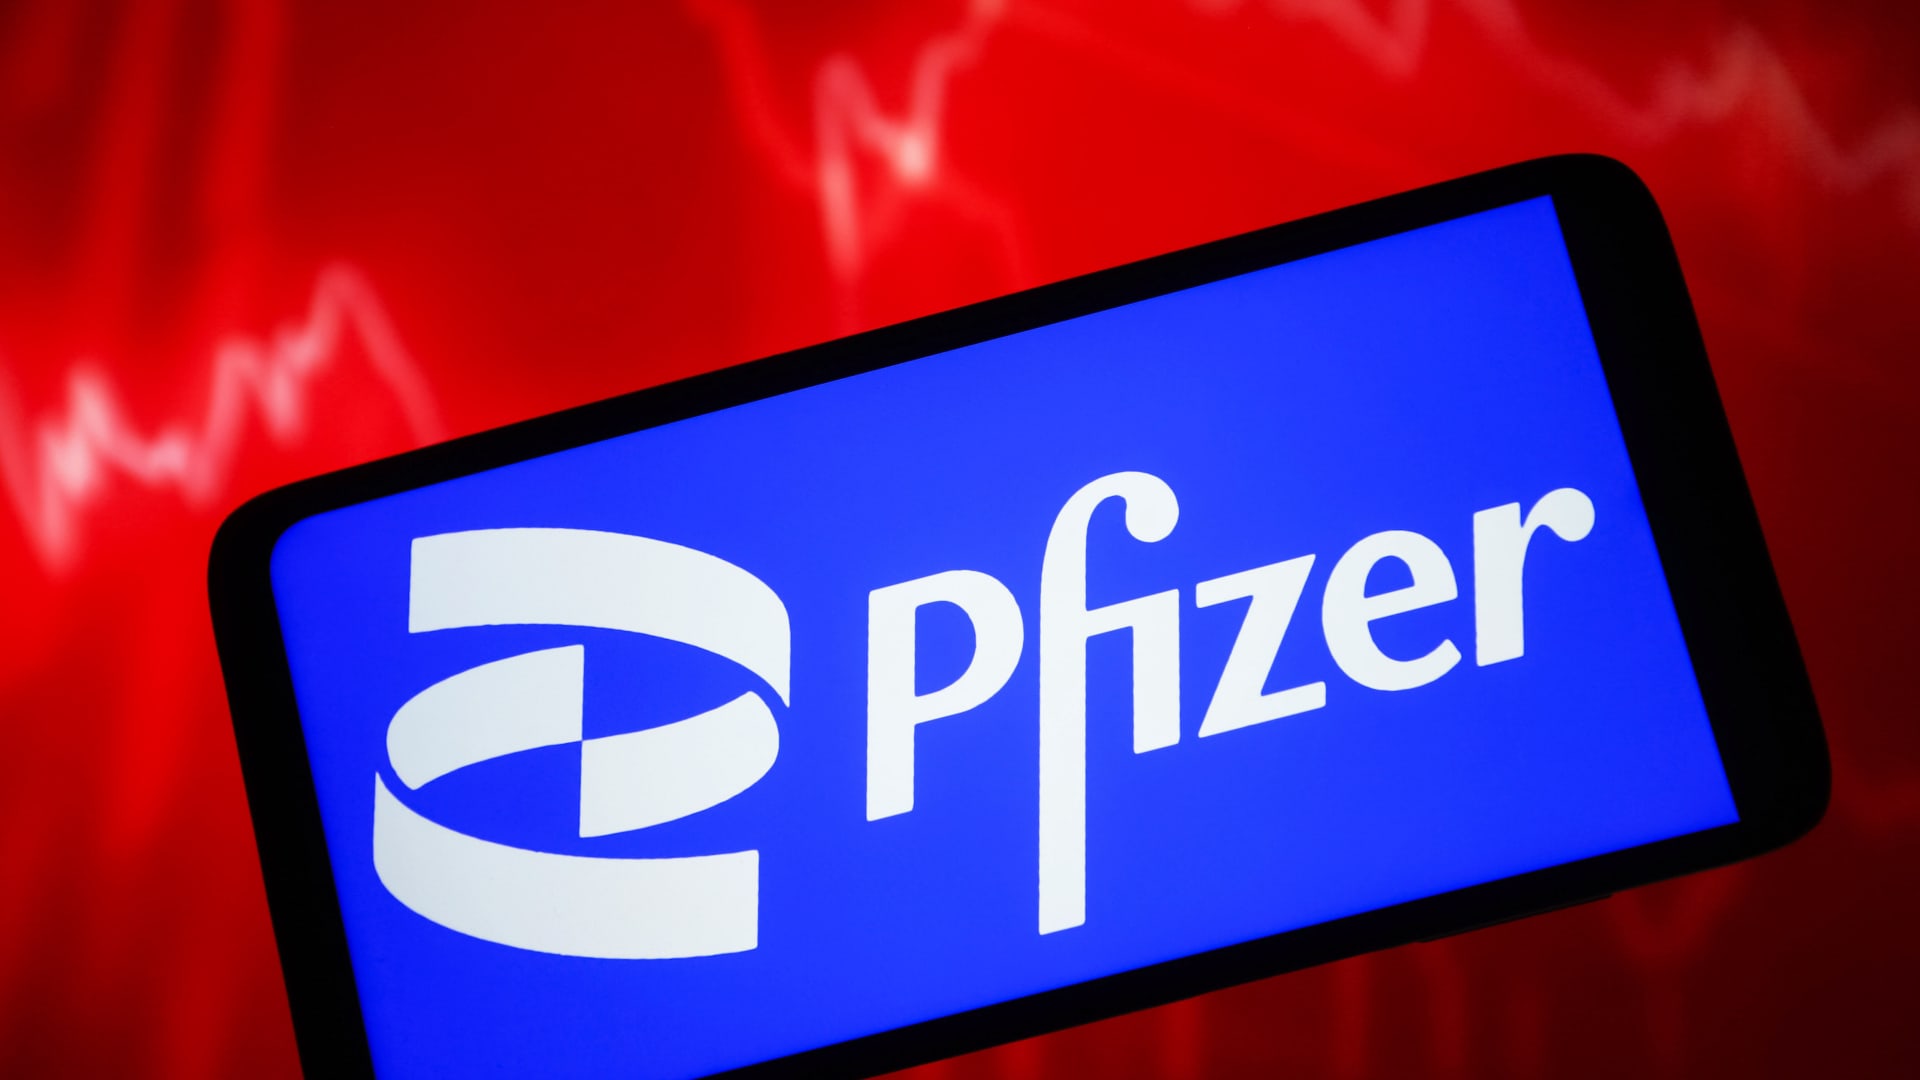 FDA Approves Pfizer Gene Therapy Beqvez for Treating Hemophilia B